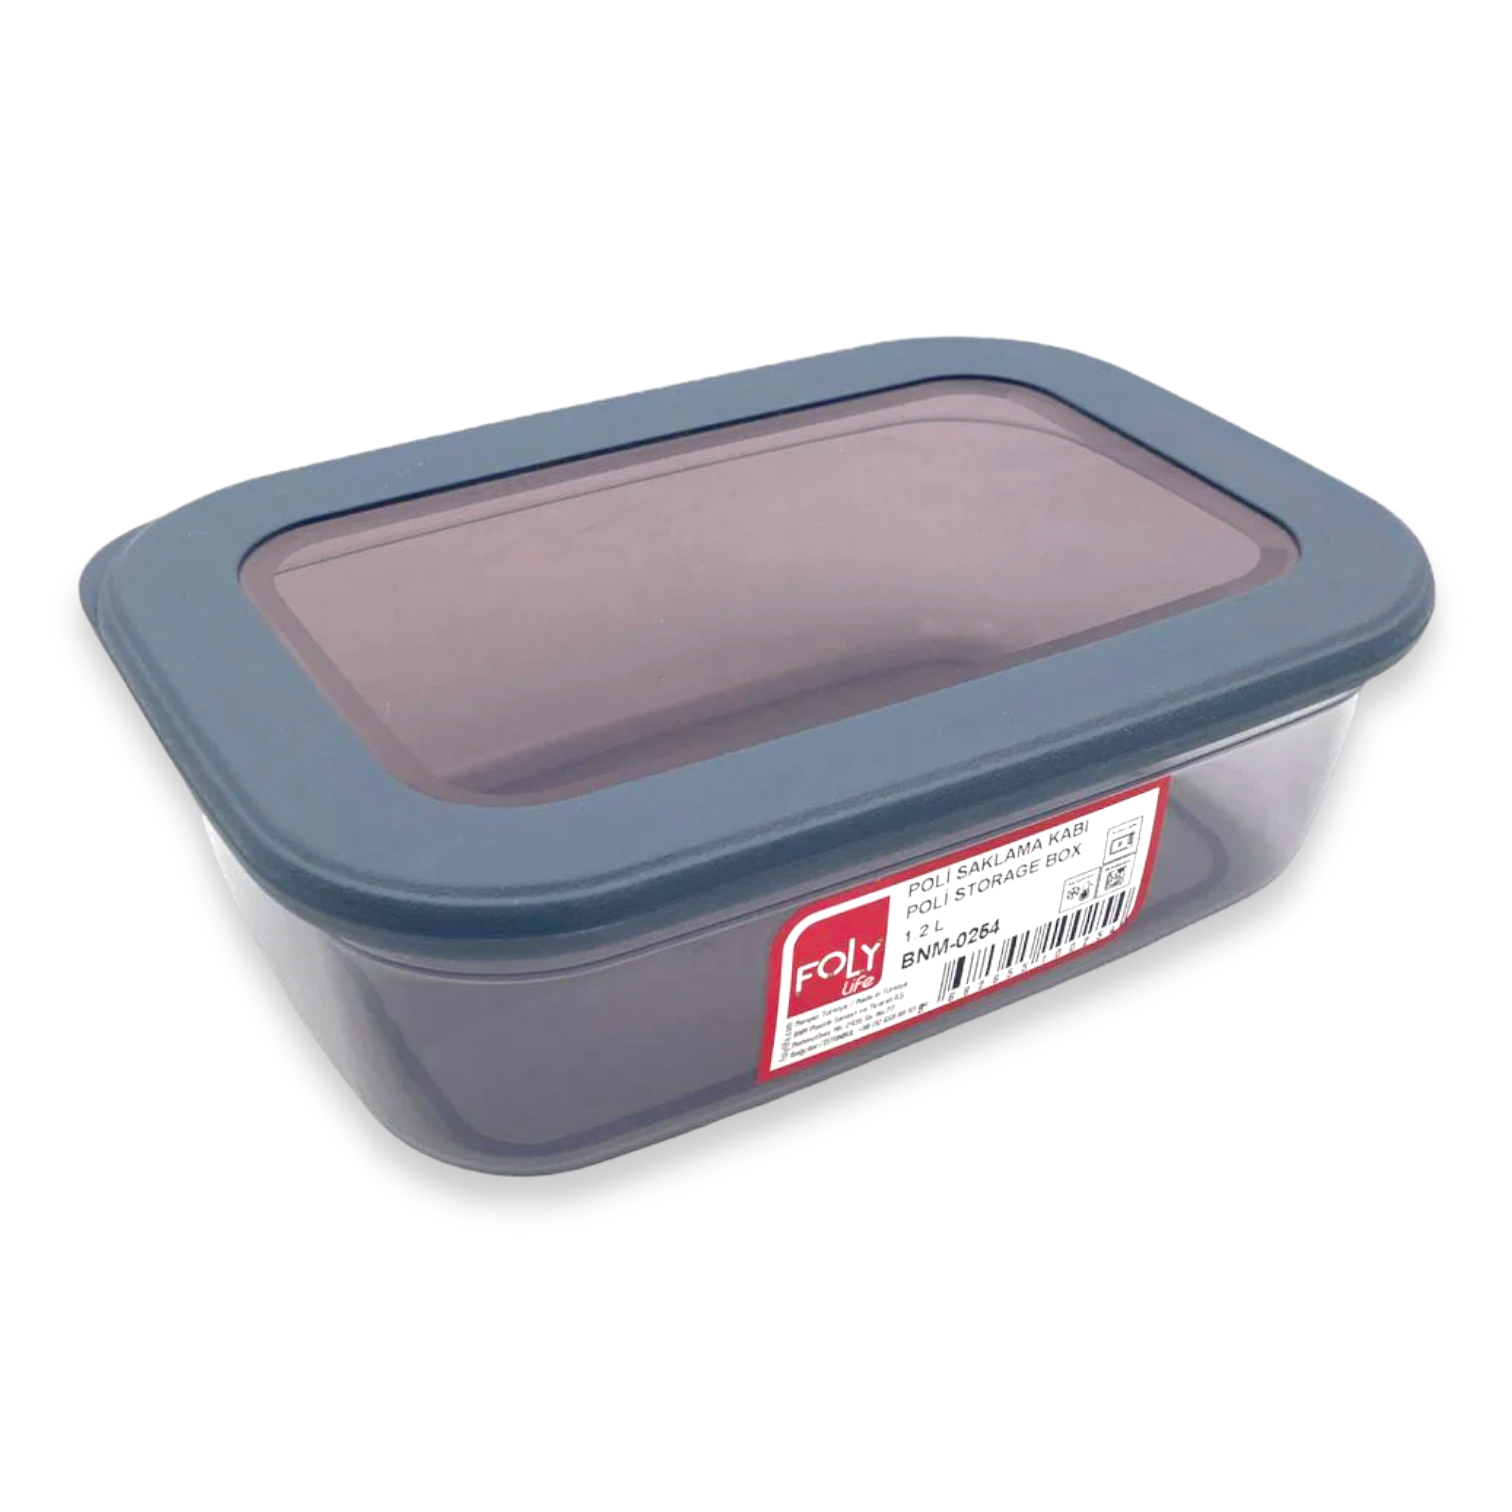 Poli Food Storage Box with Silicon Rim Cover